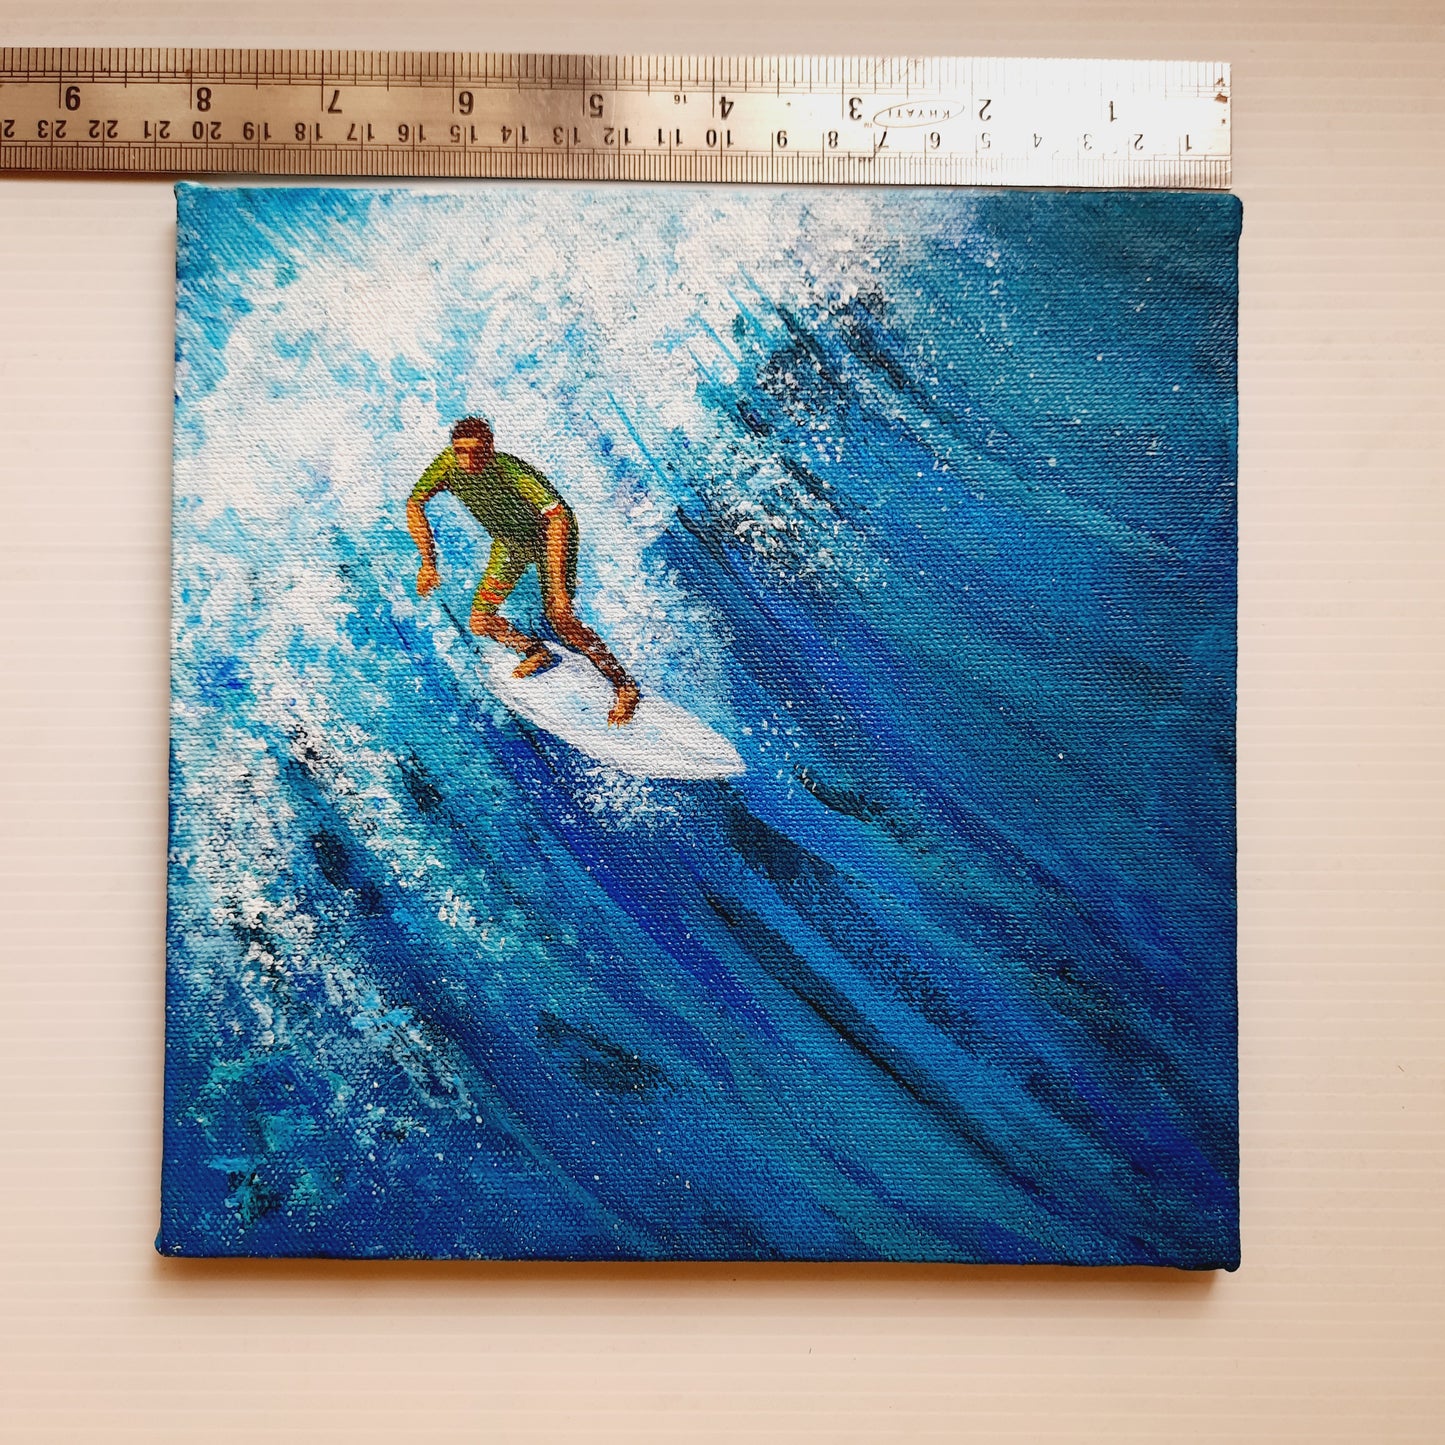 surfer riding the ocean waves, measurement